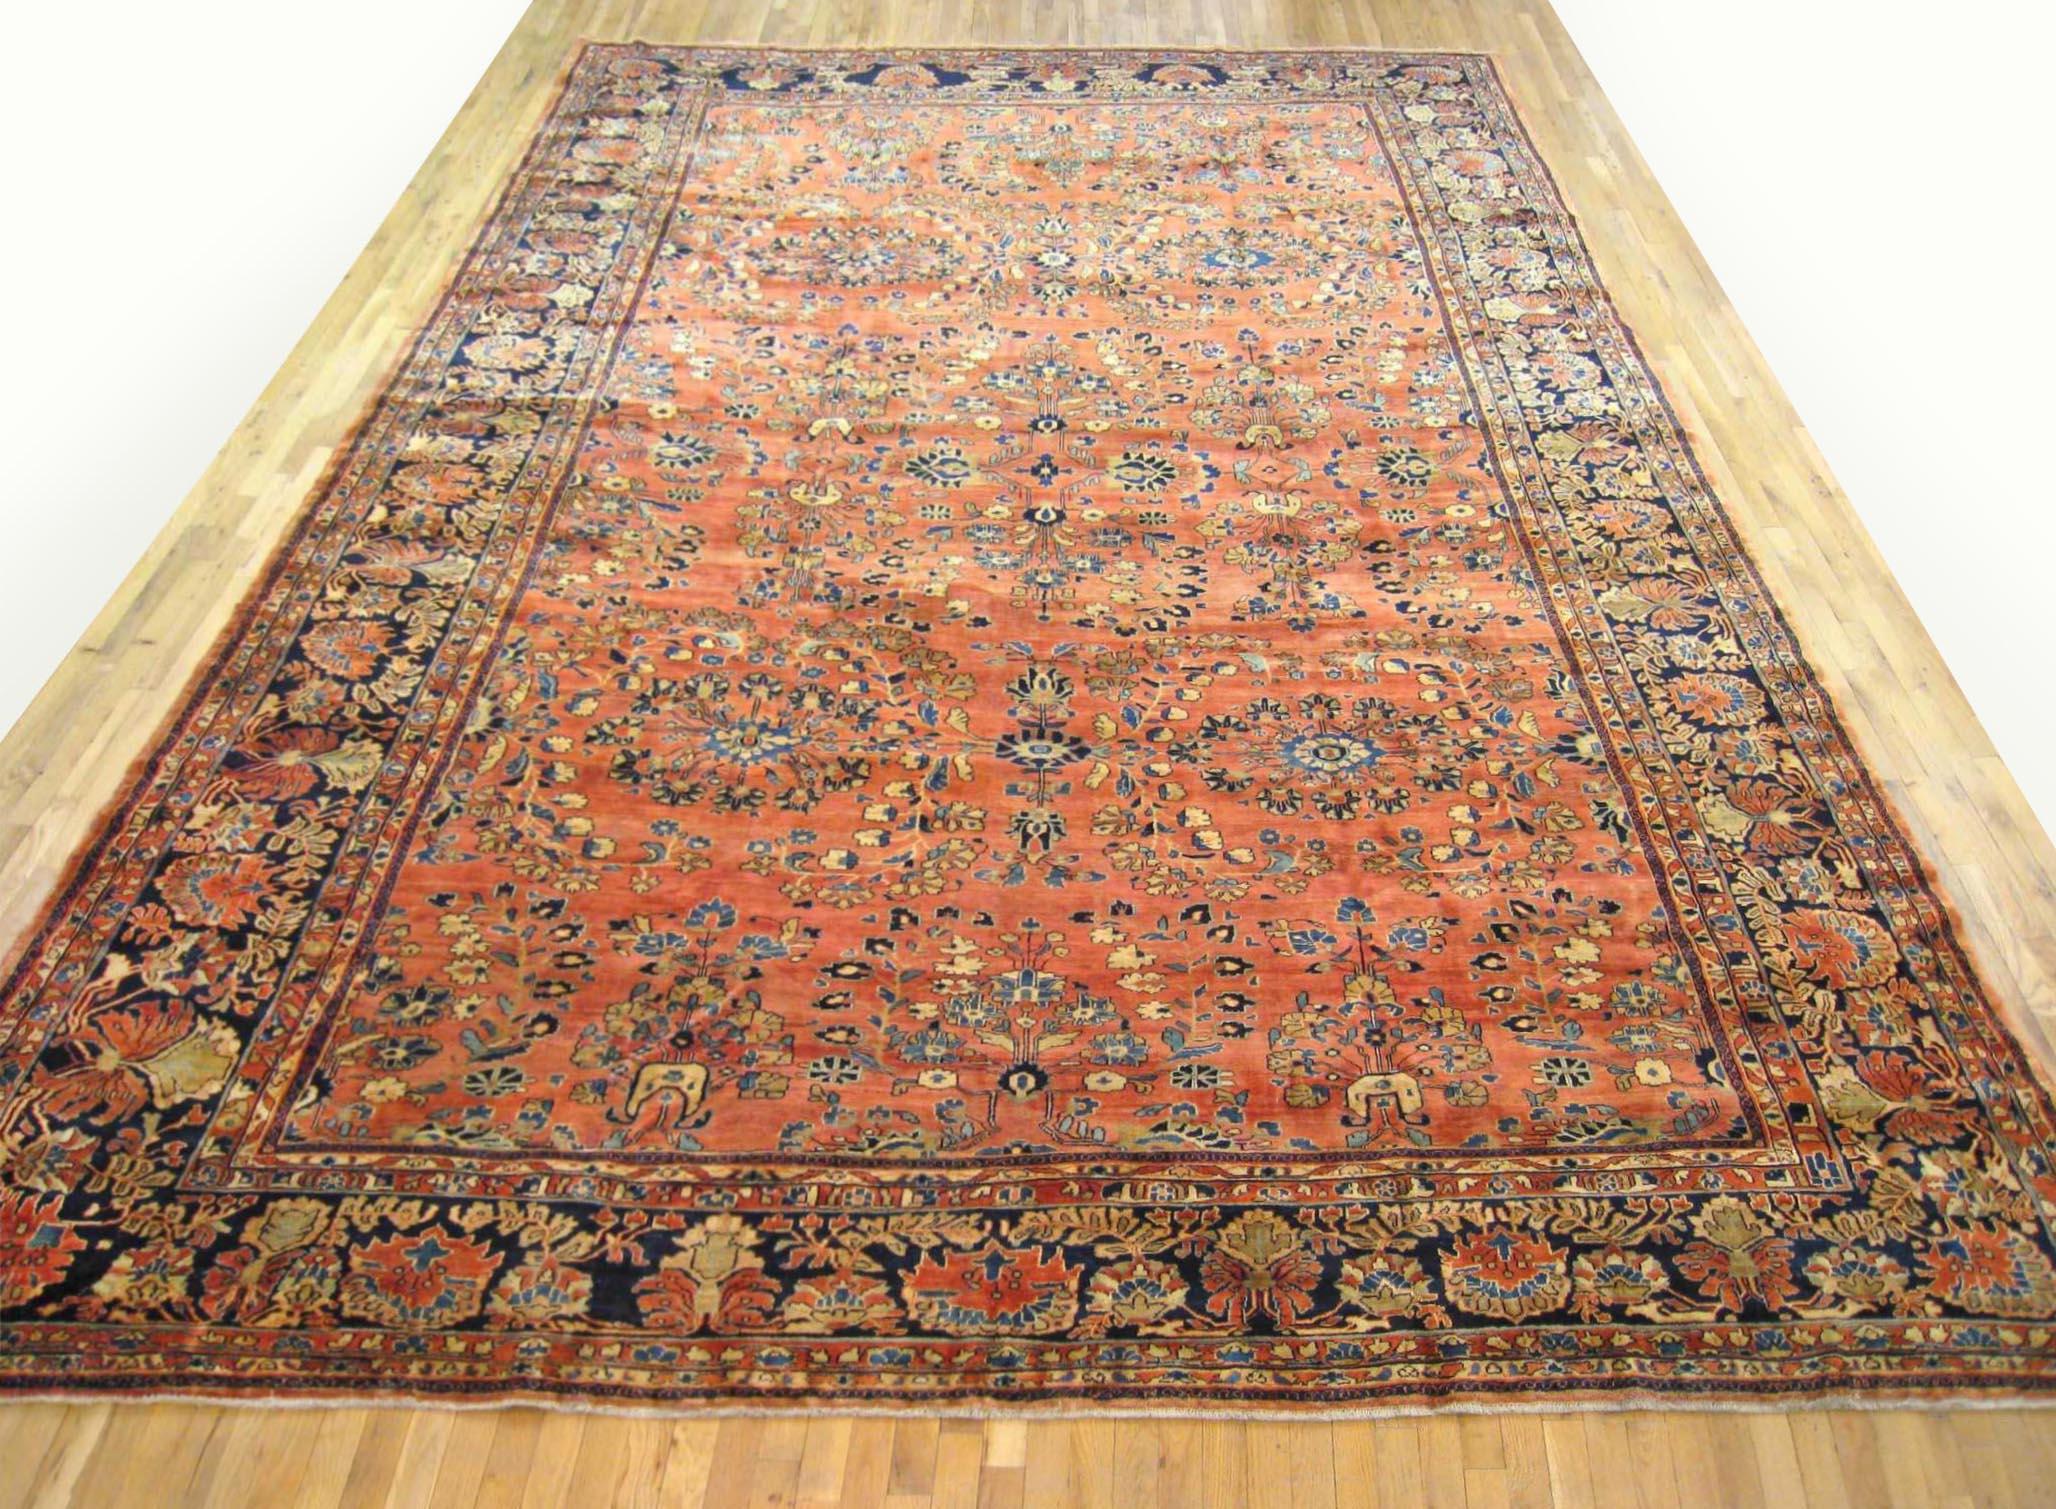 Antique Mohajeran Sarouk Oriental Rug, circa 1910, Large size

An antique Mohajeran Sarouk oriental rug, size 17'0